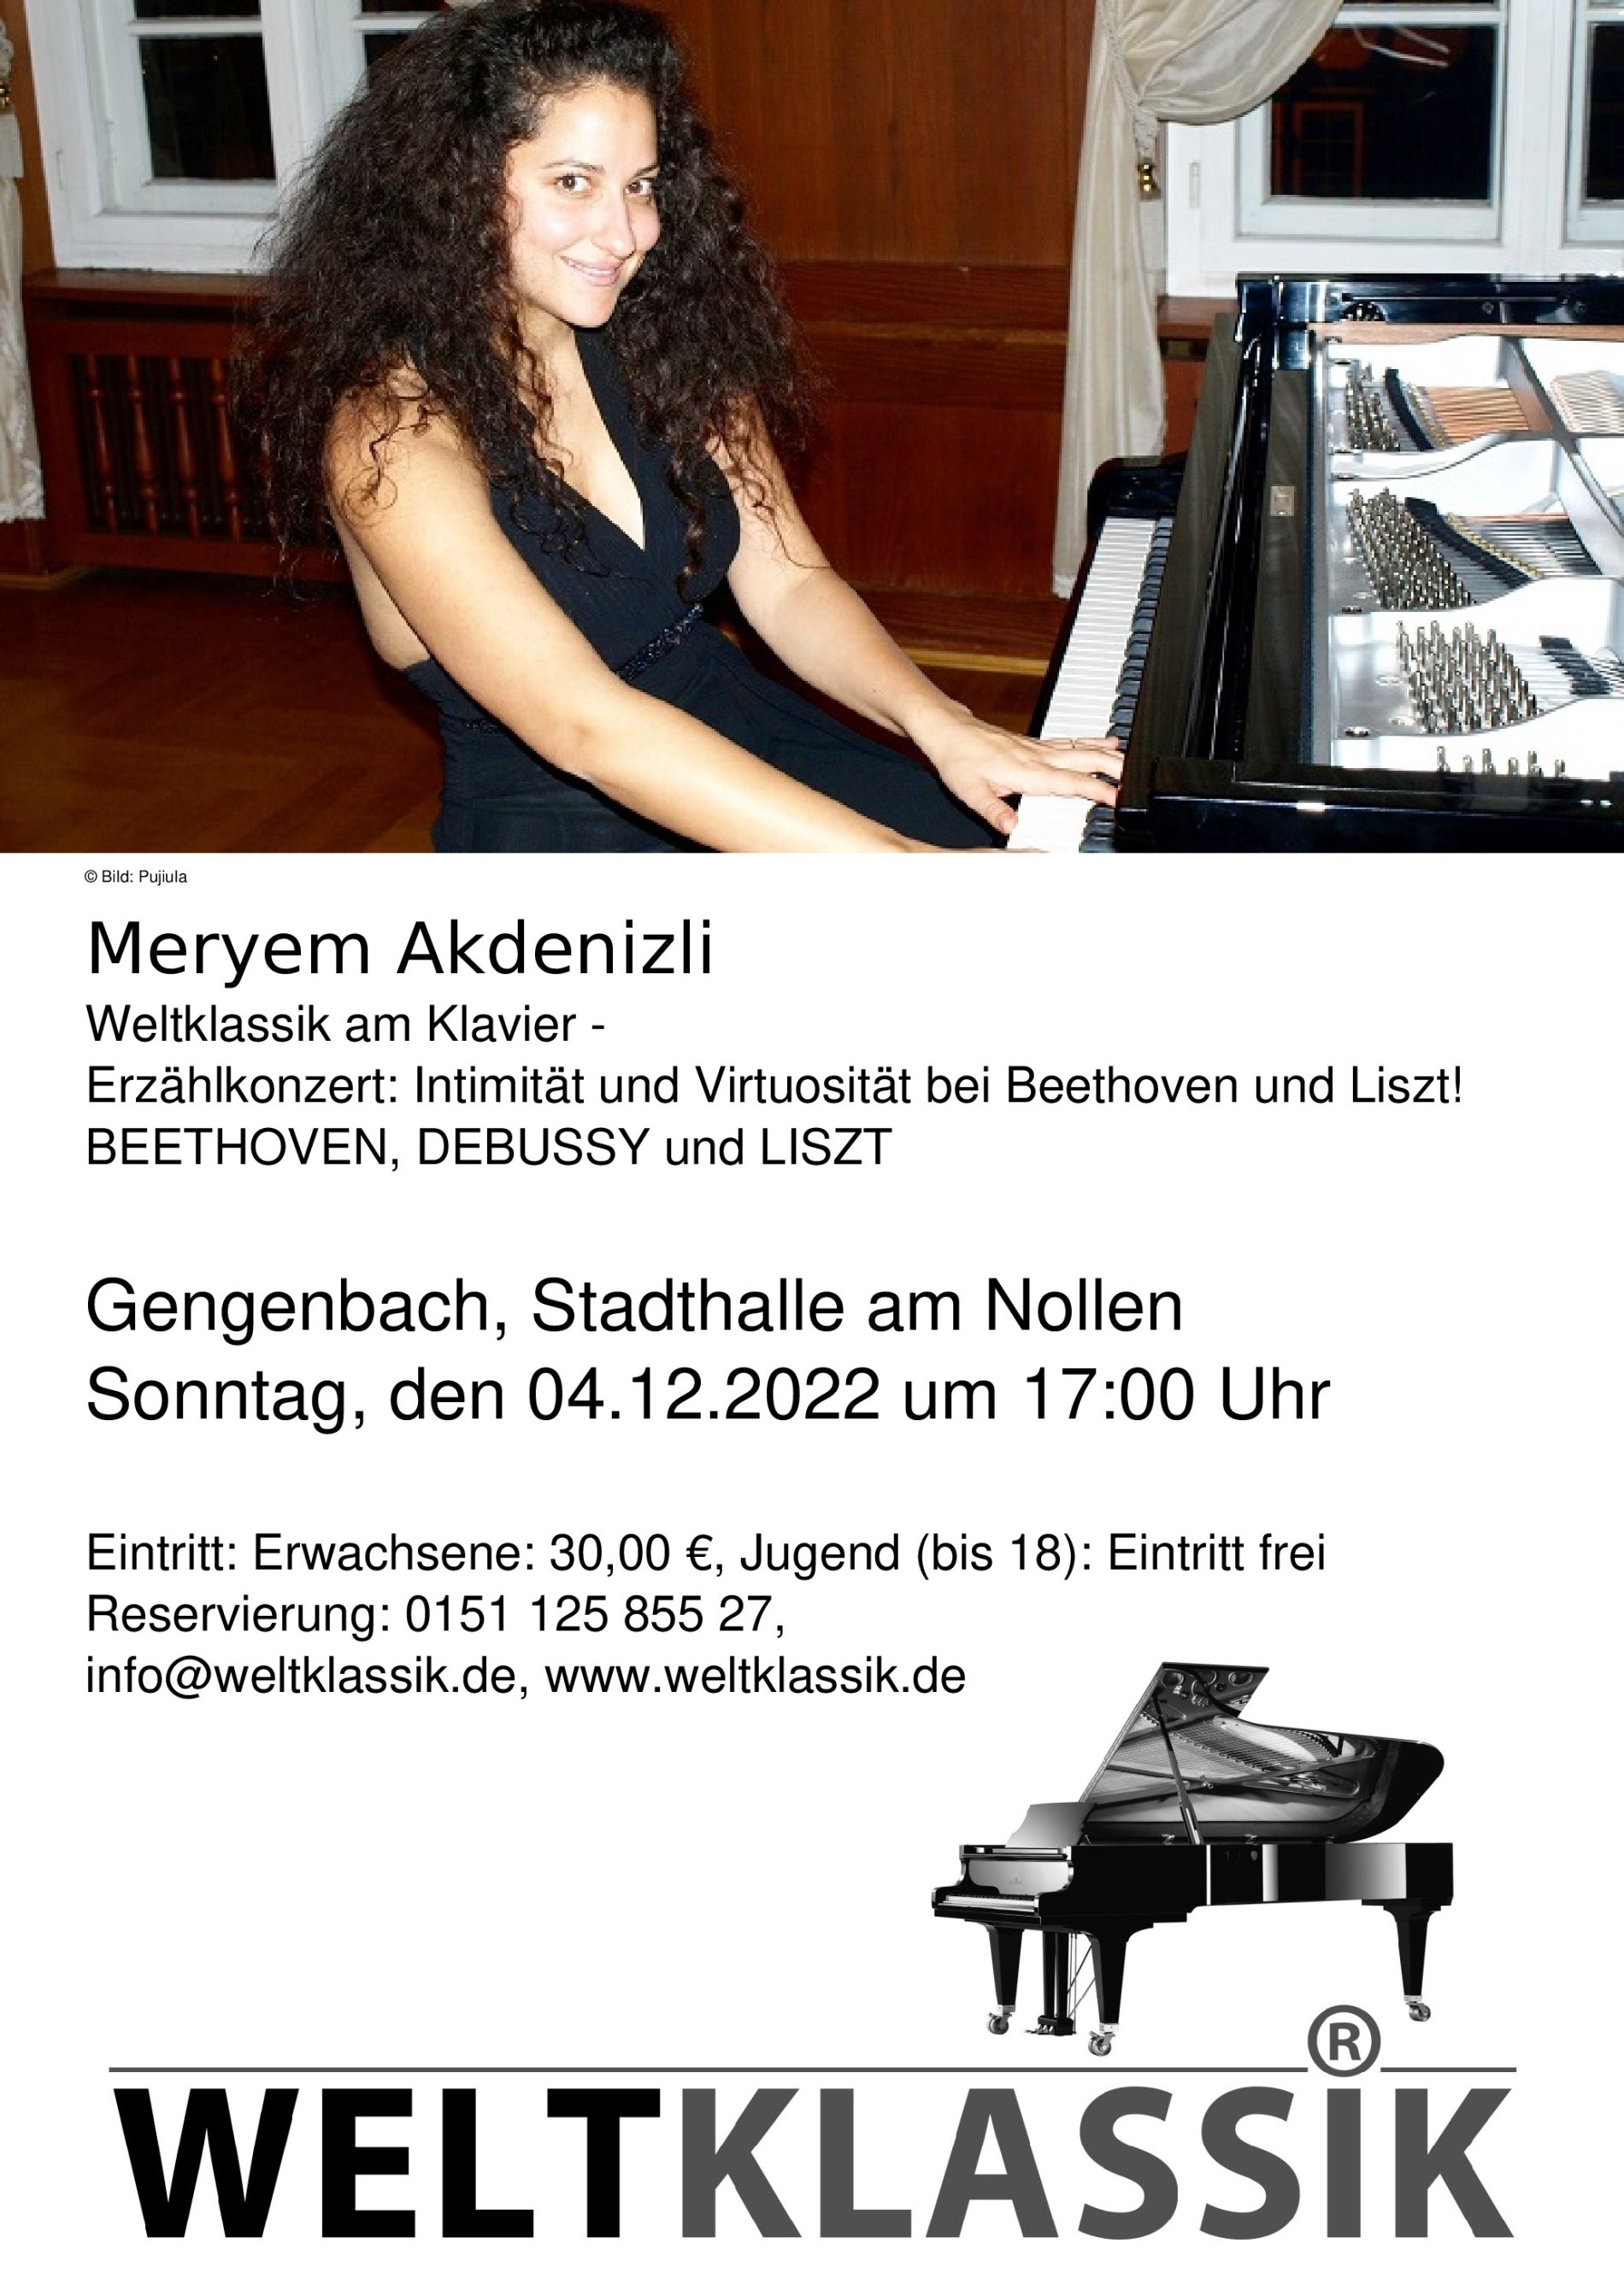 Meryem Akdenizli / Urheber: Weltklassik am Klavier